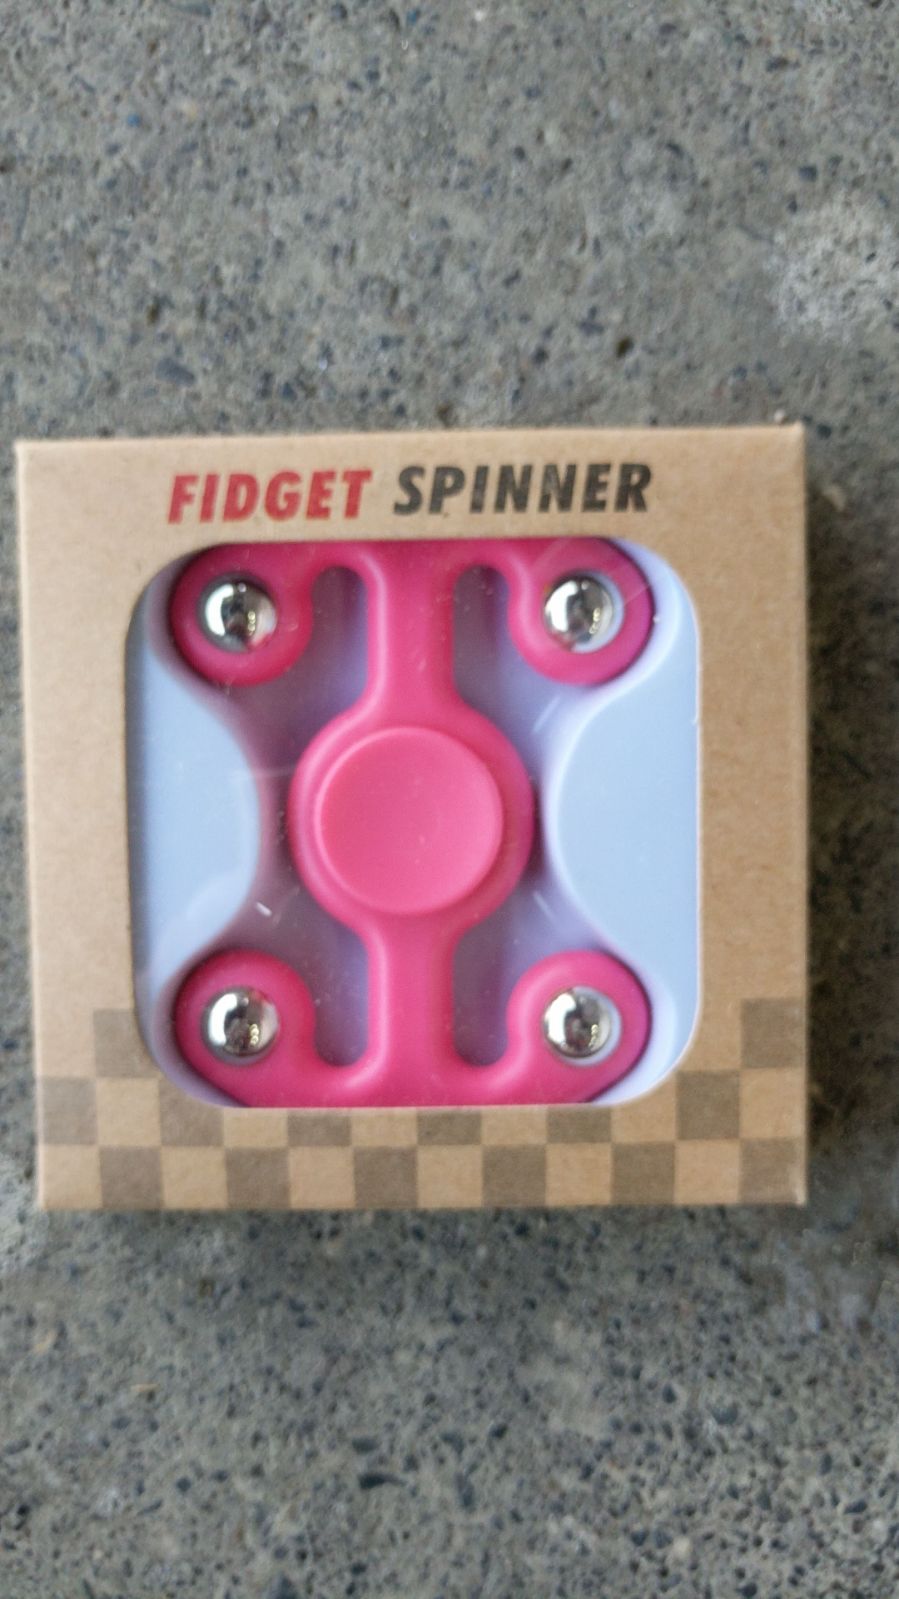 4 Sided Fidgit Fidget Spinner, Pink